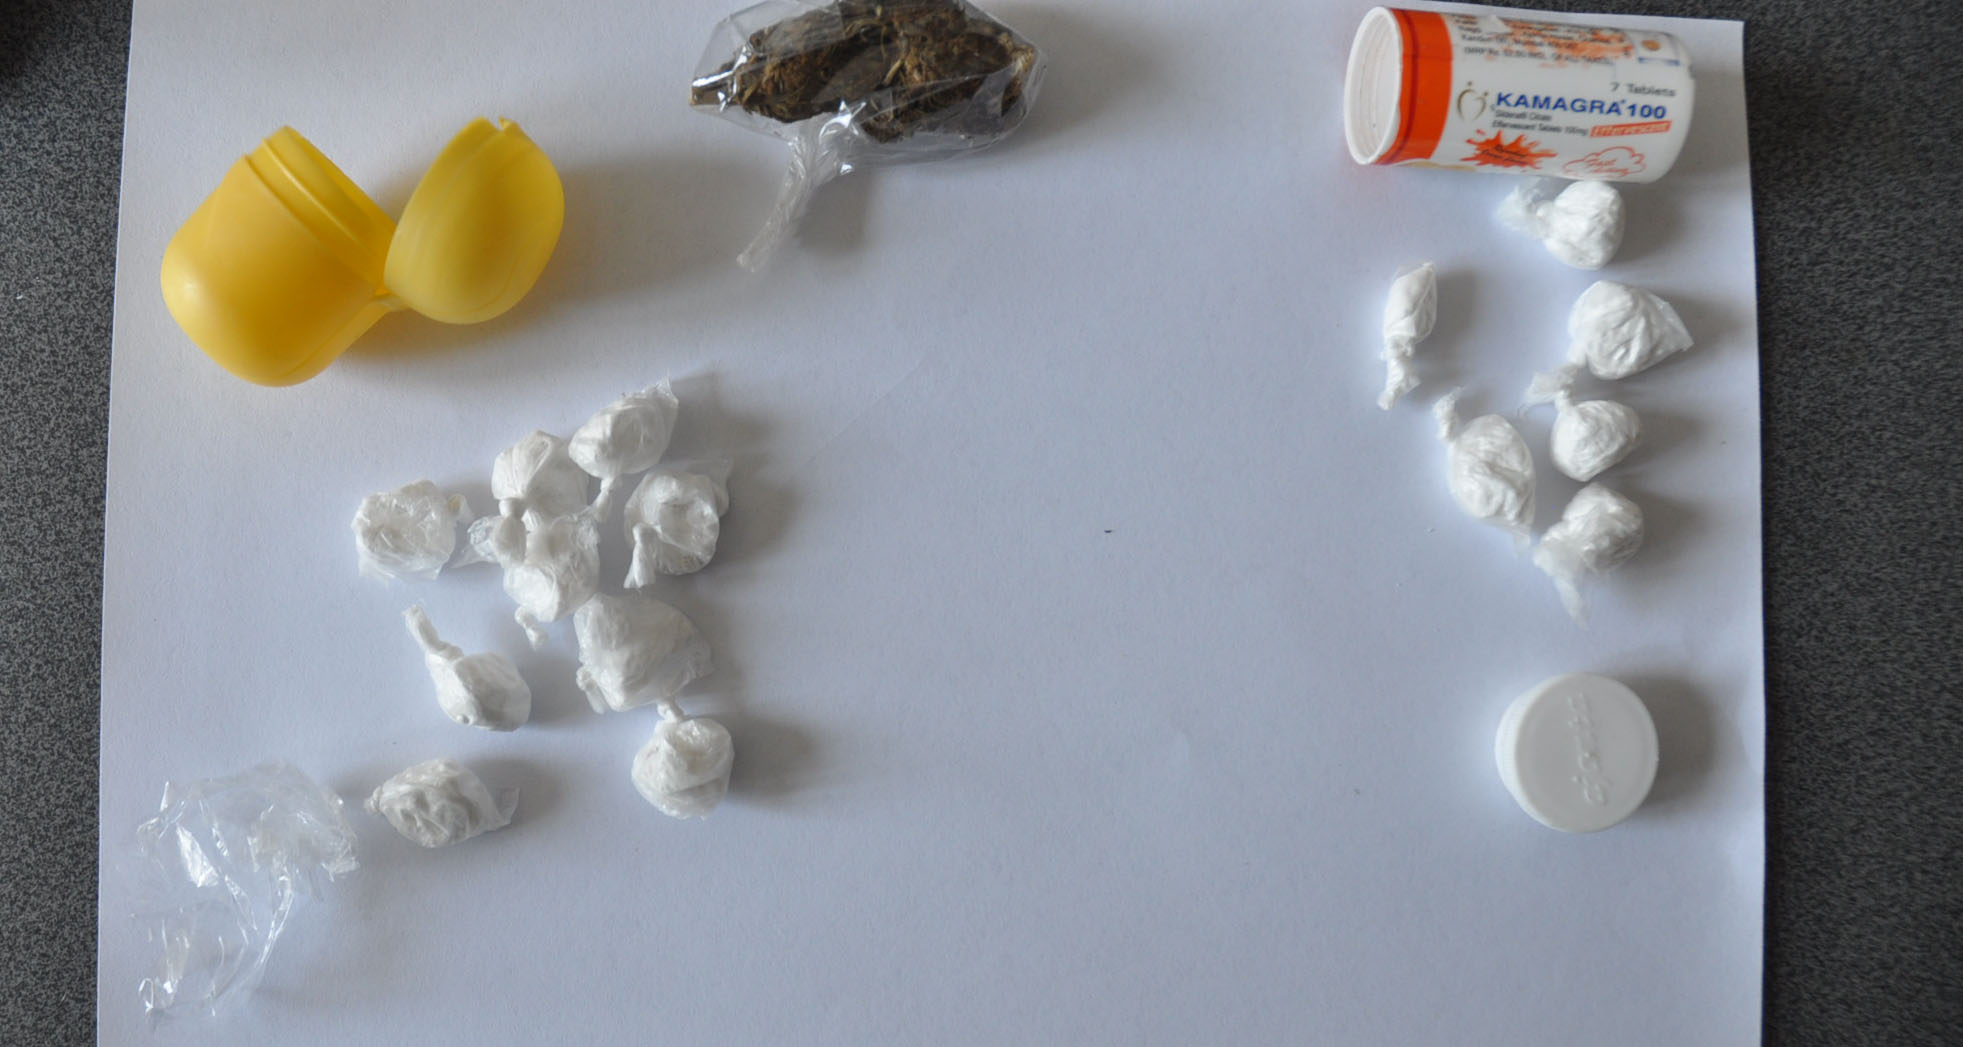 Заплењено више од 1.000 таблета МДМА, кокаин и амфетамин